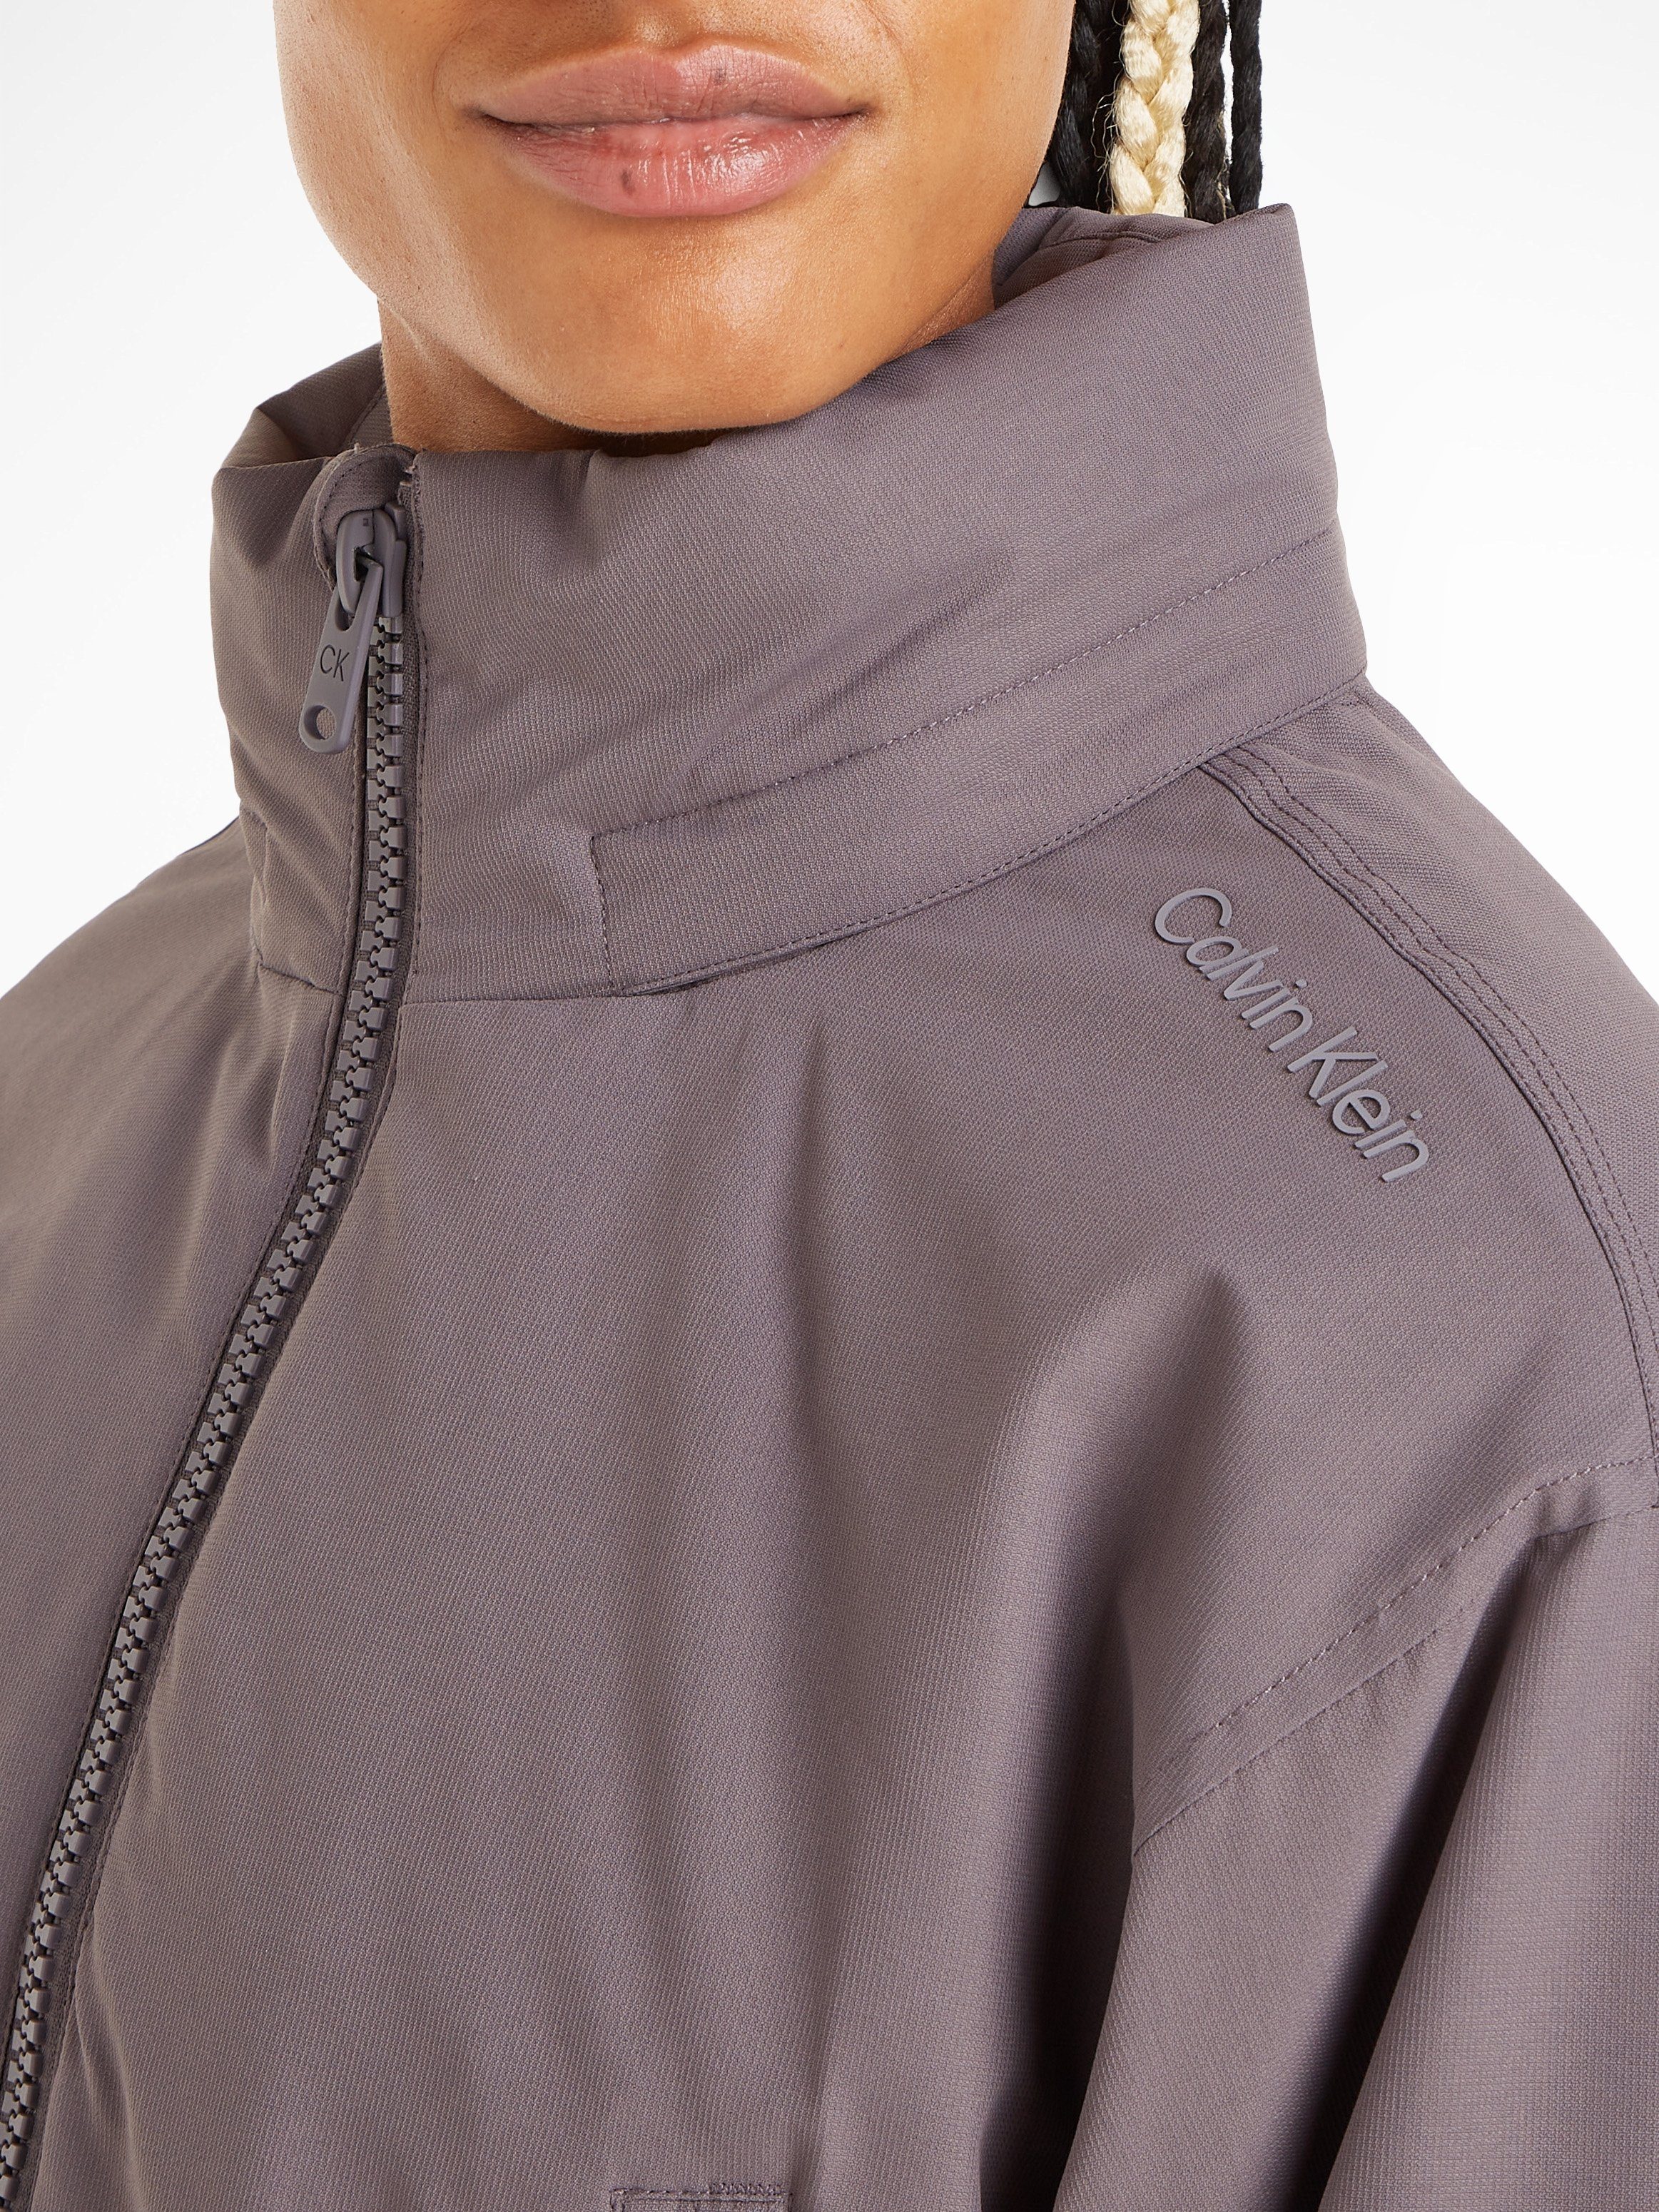 Calvin Klein Sport Outdoorjacke PW Padded - Jacket grau